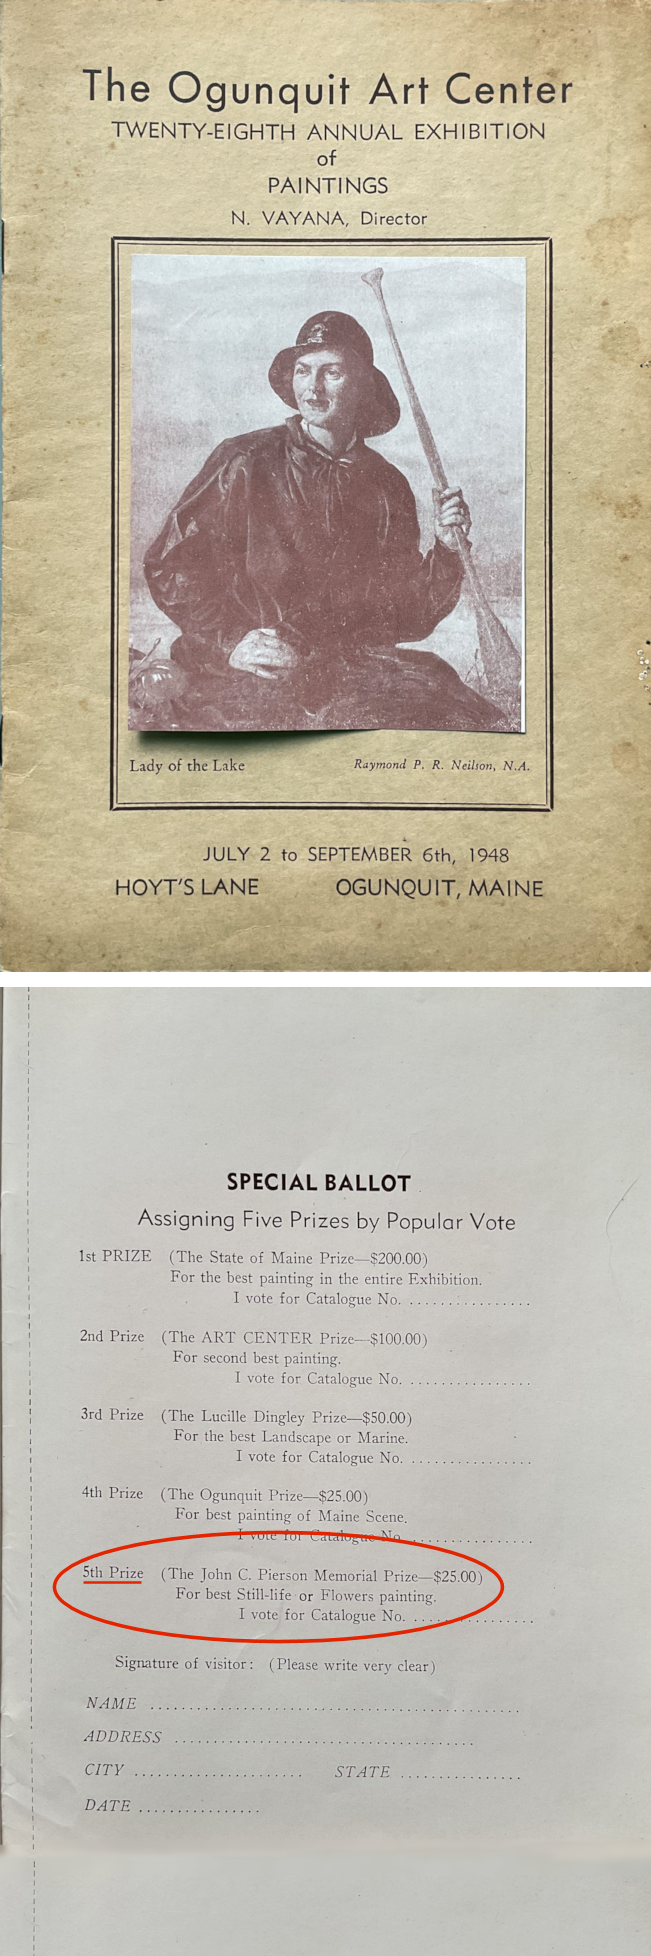 1948 Ogunquit Exhibition Program and Ballot